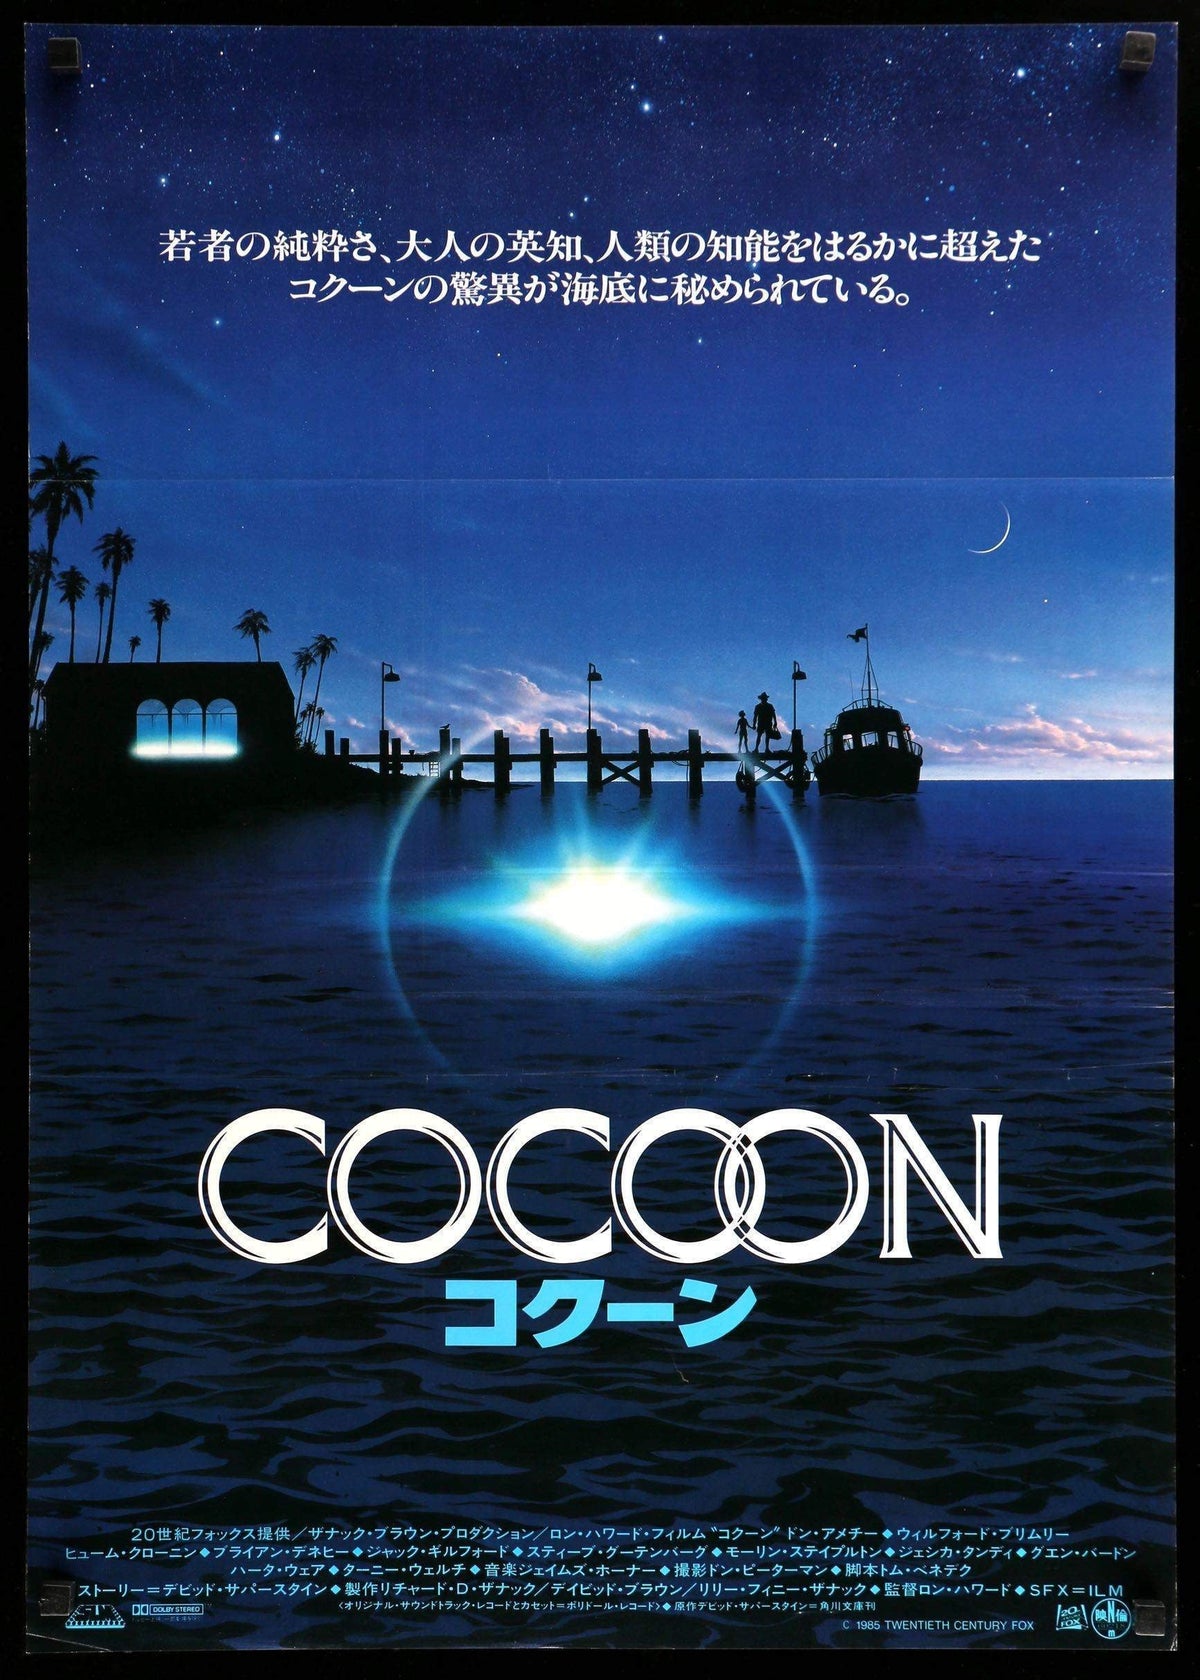 Cocoon (1985) original movie poster for sale at Original Film Art